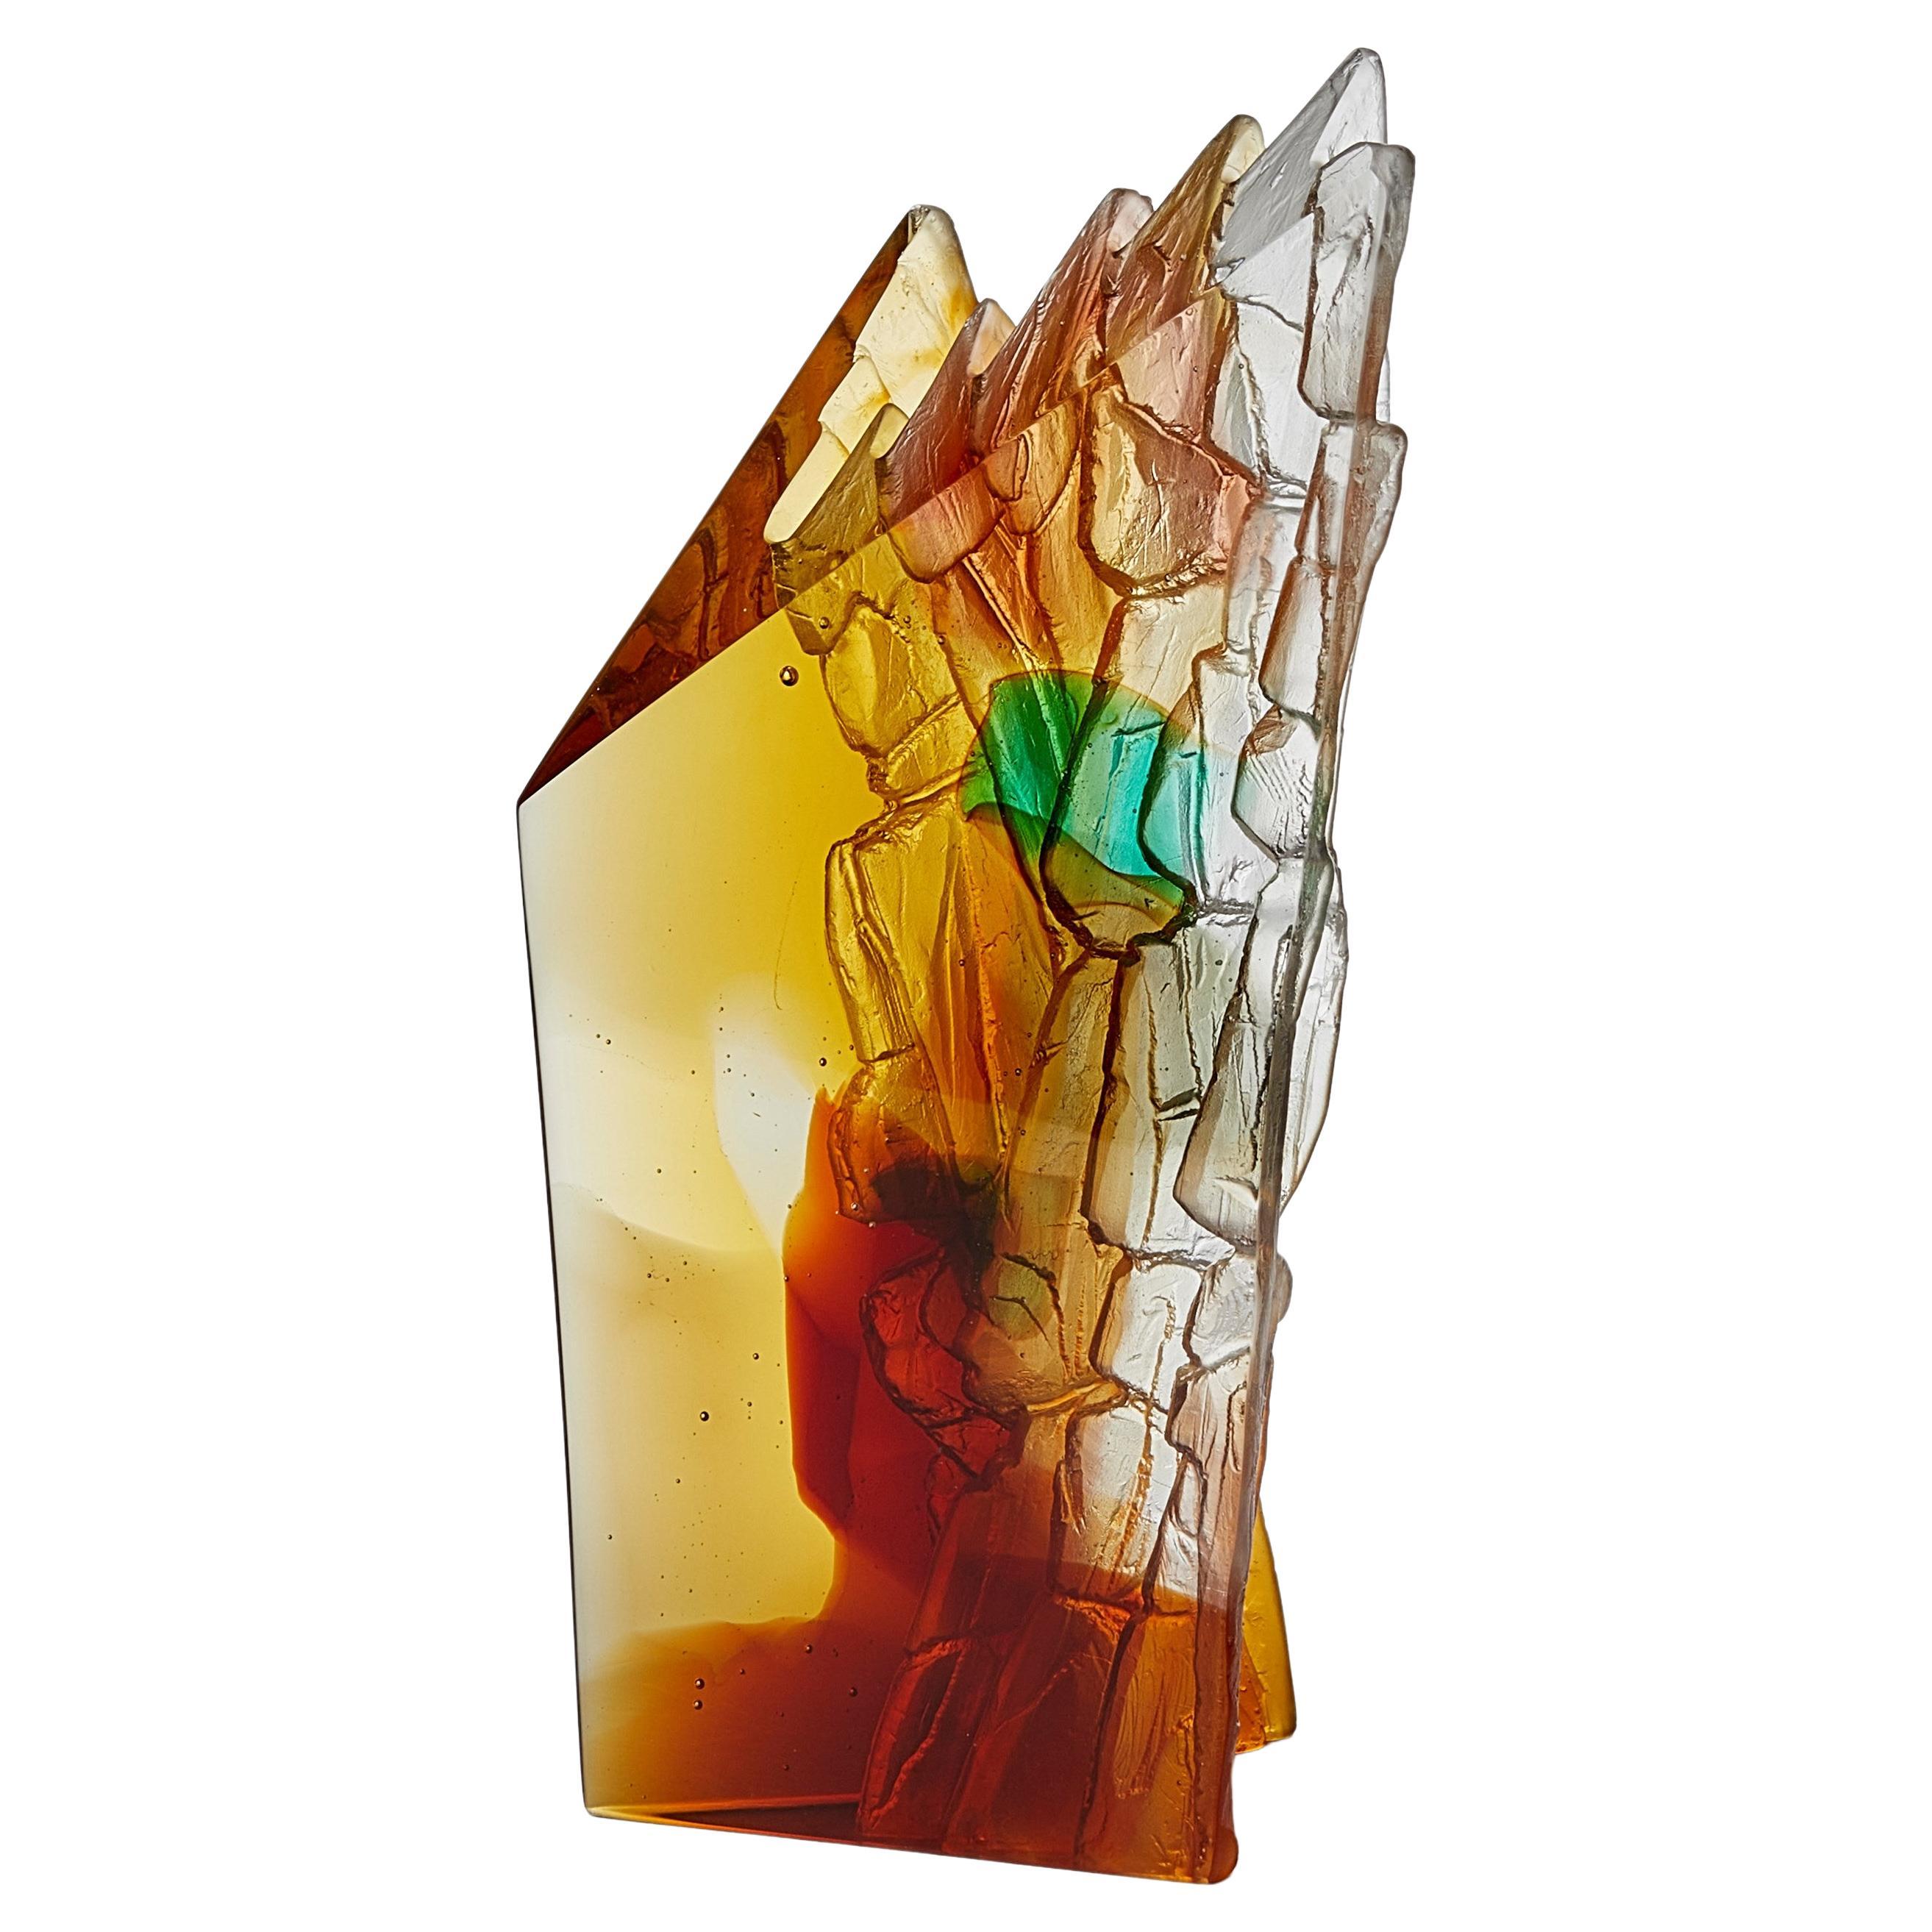 Amber Cliff, dark amber & green cliff inspired glass sculpture by Crispian Heath